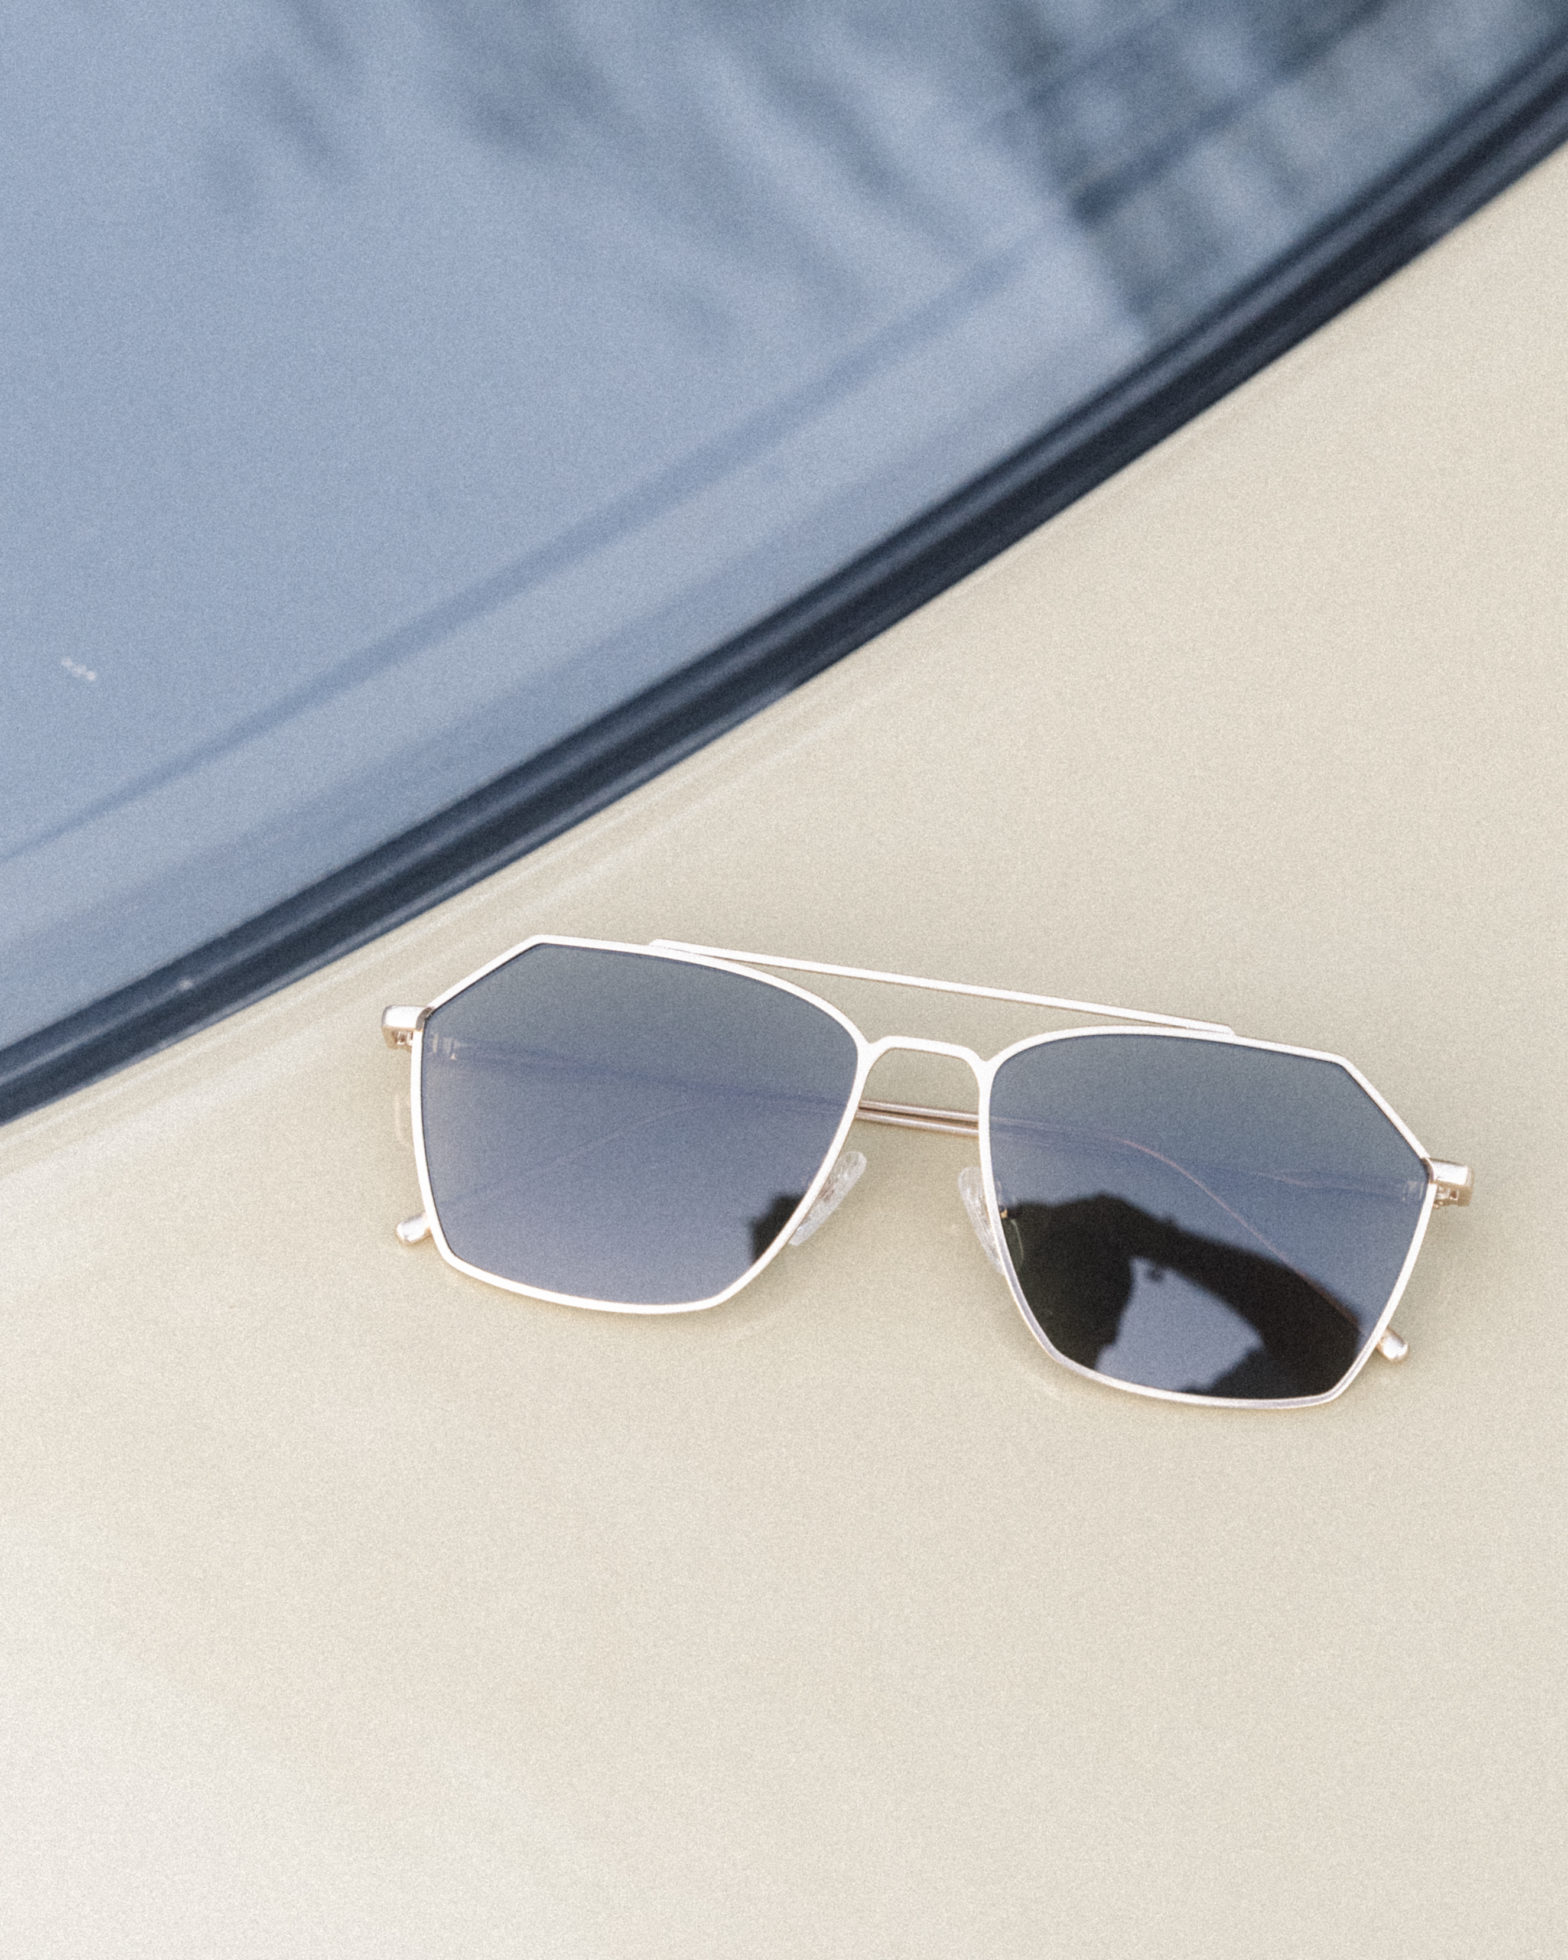 Sunglasses for Oval shape